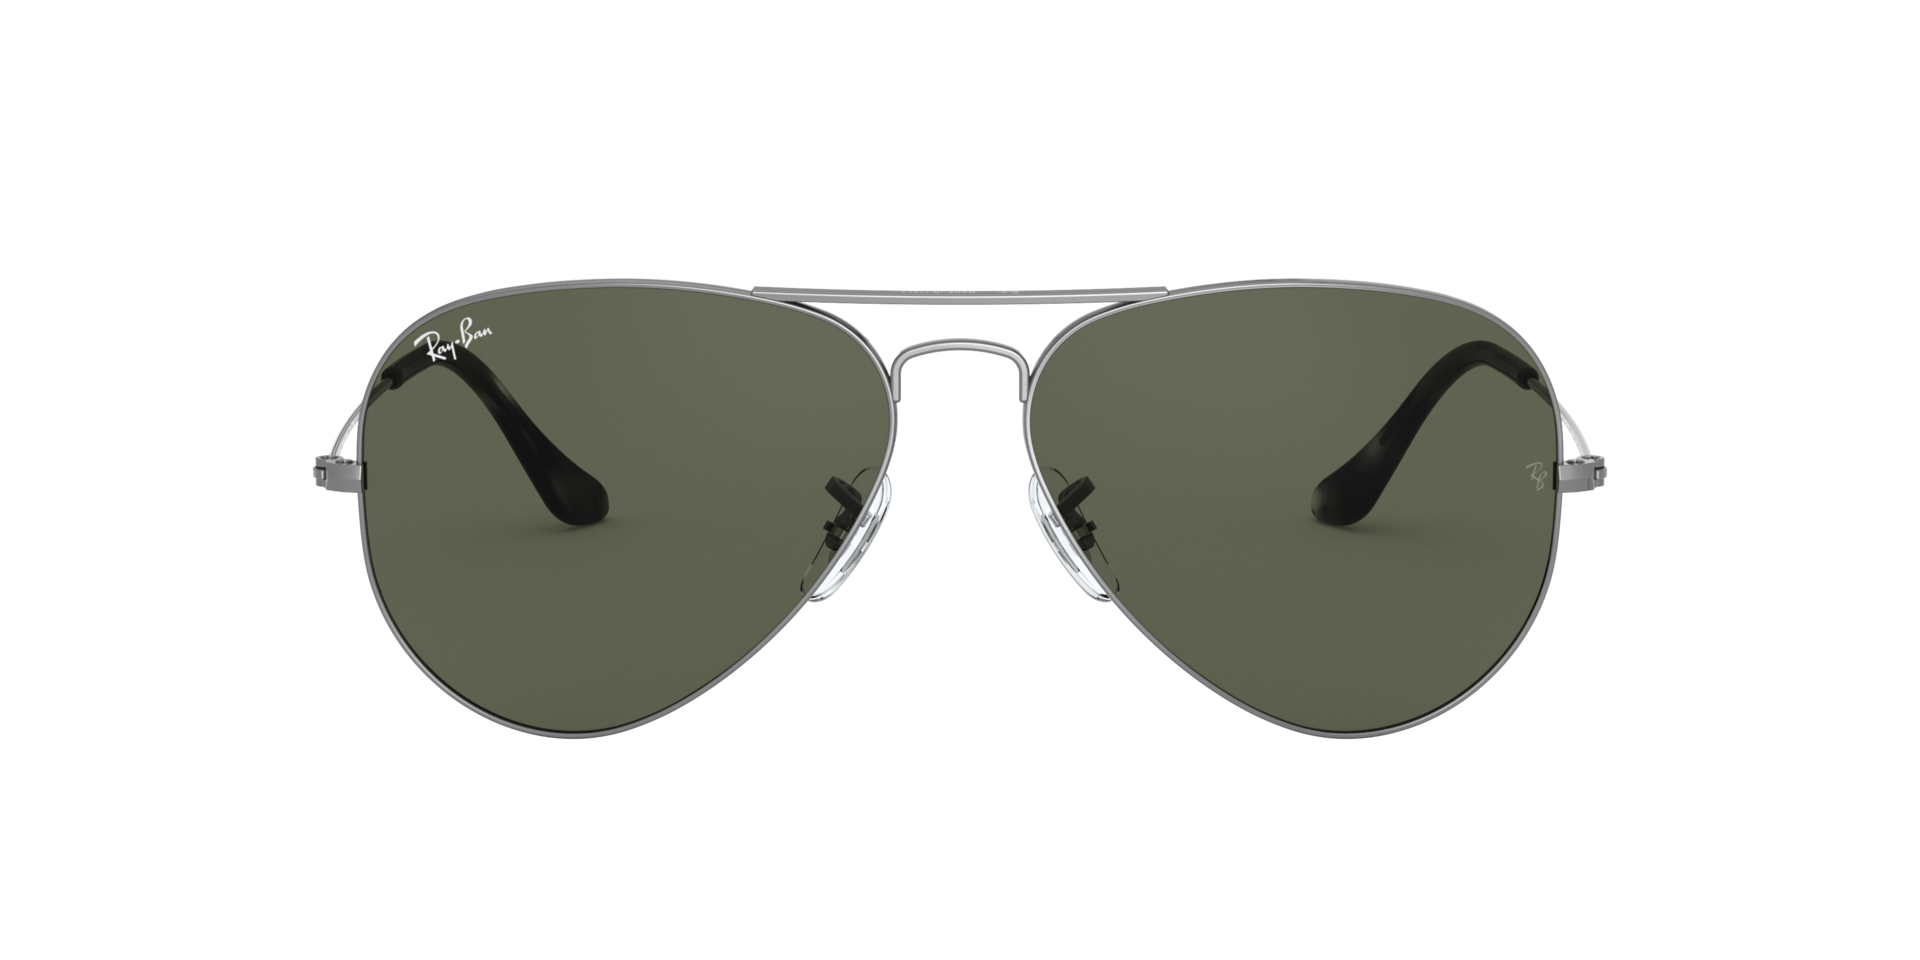 The Best Sunglasses for Smaller Faces | Quay Australia